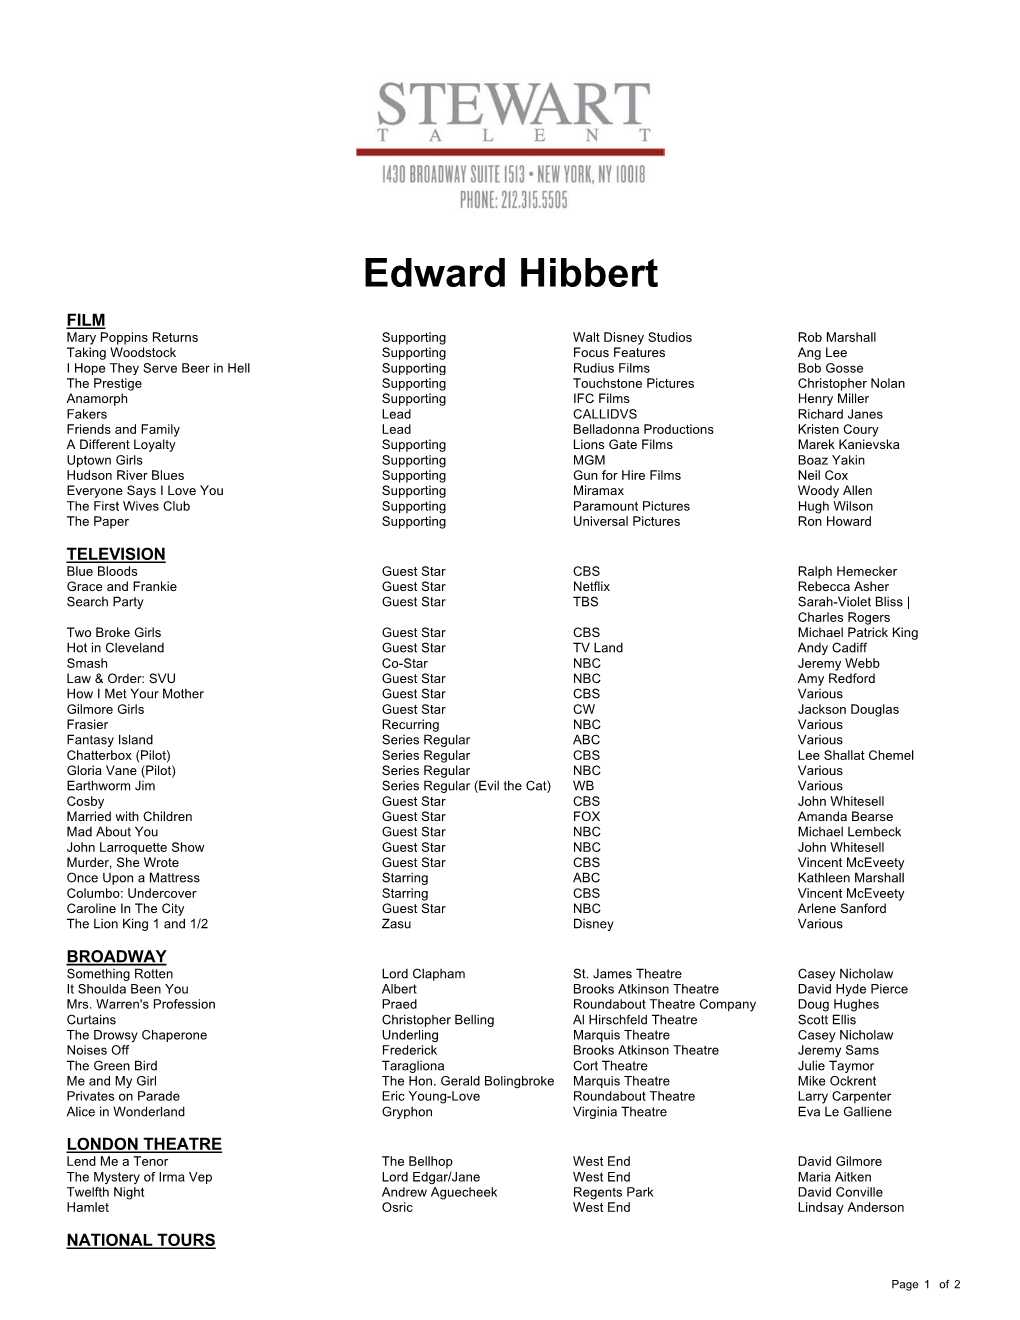 Edward Hibbert Theatrical Resume